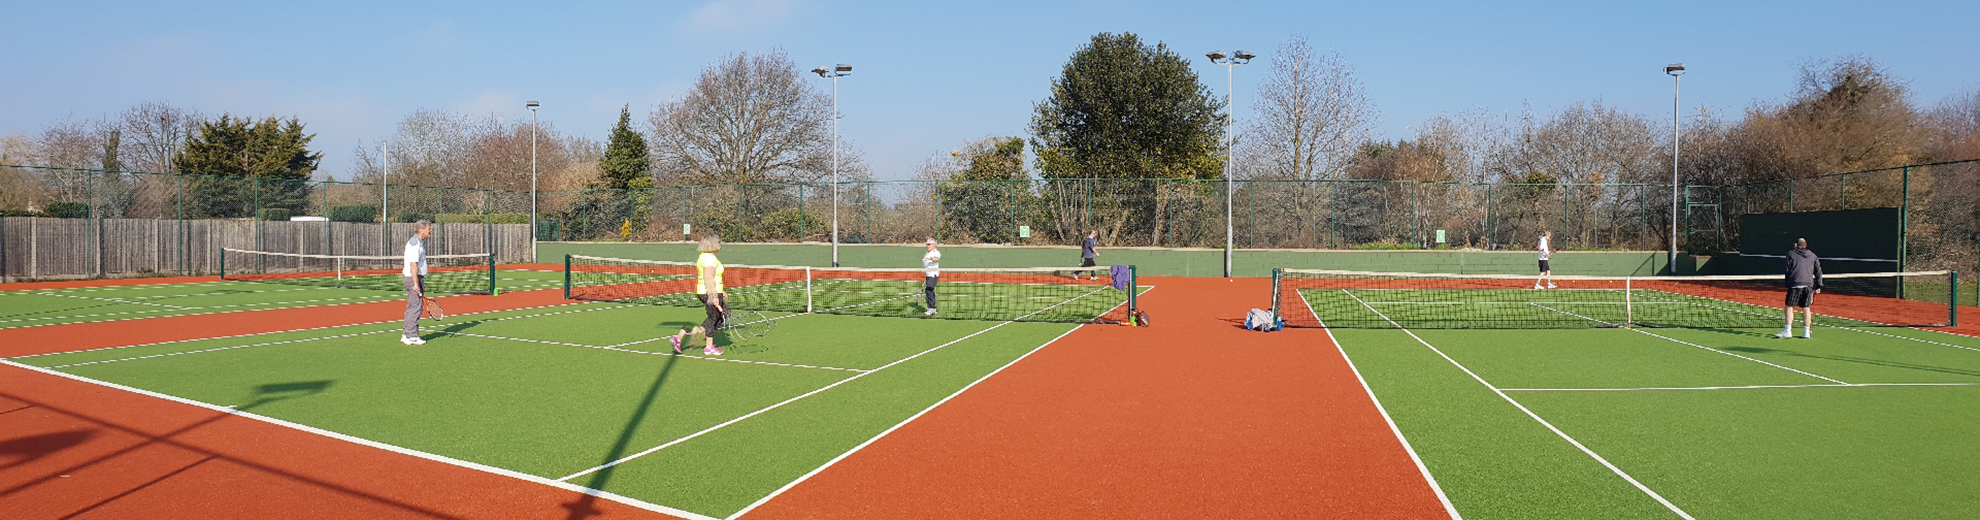 Croxley Tennis Club - Membership Plans